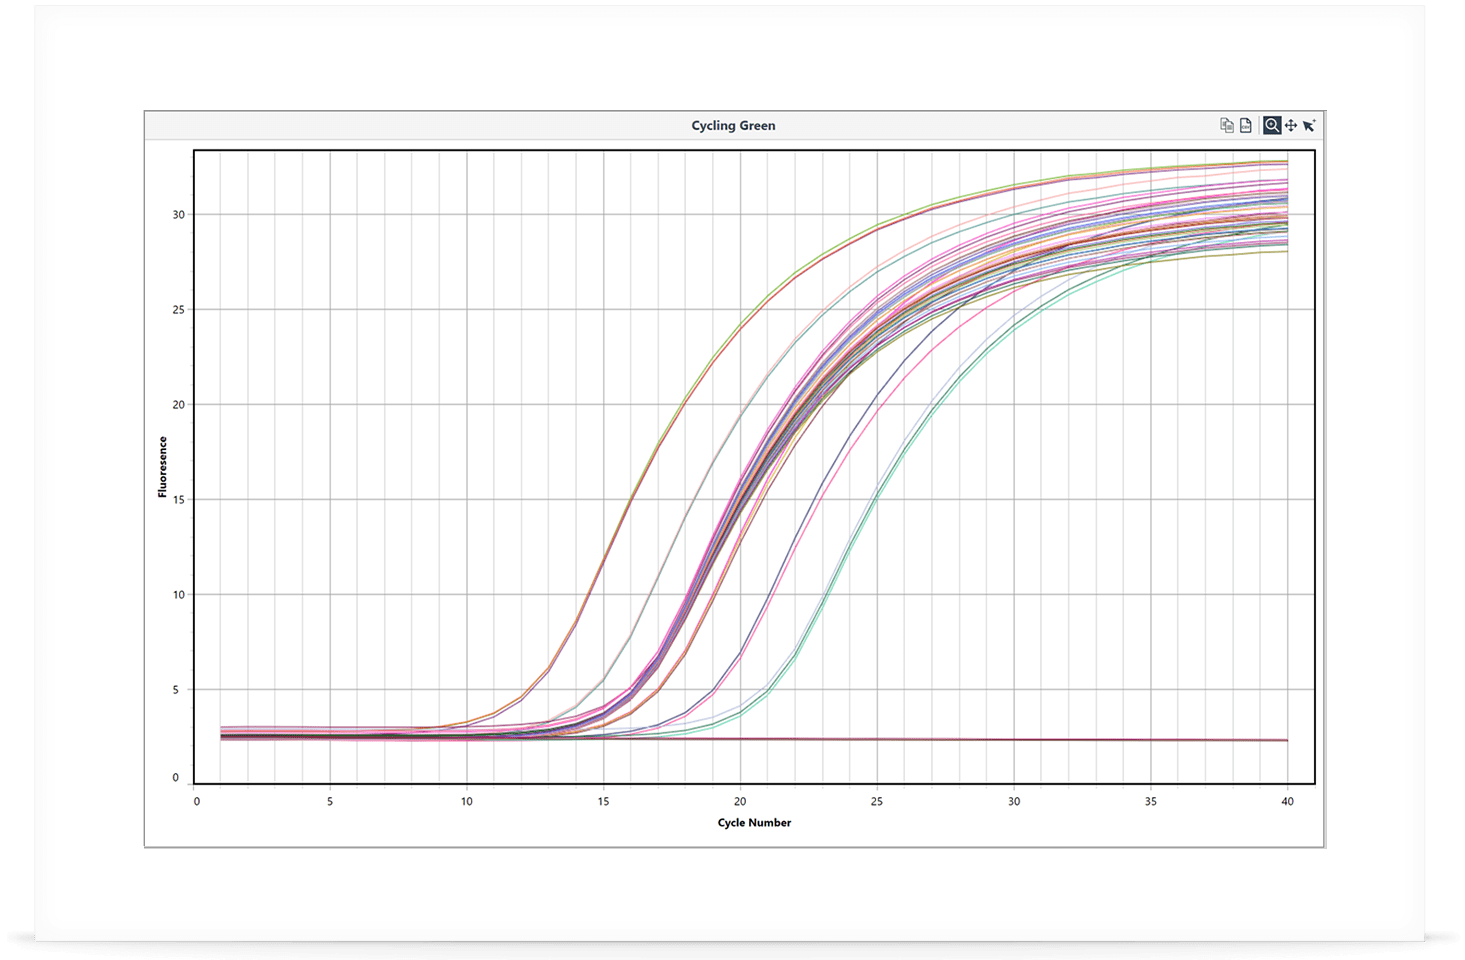 Mic qPCR Cycler Software - Standard Curve Analysis